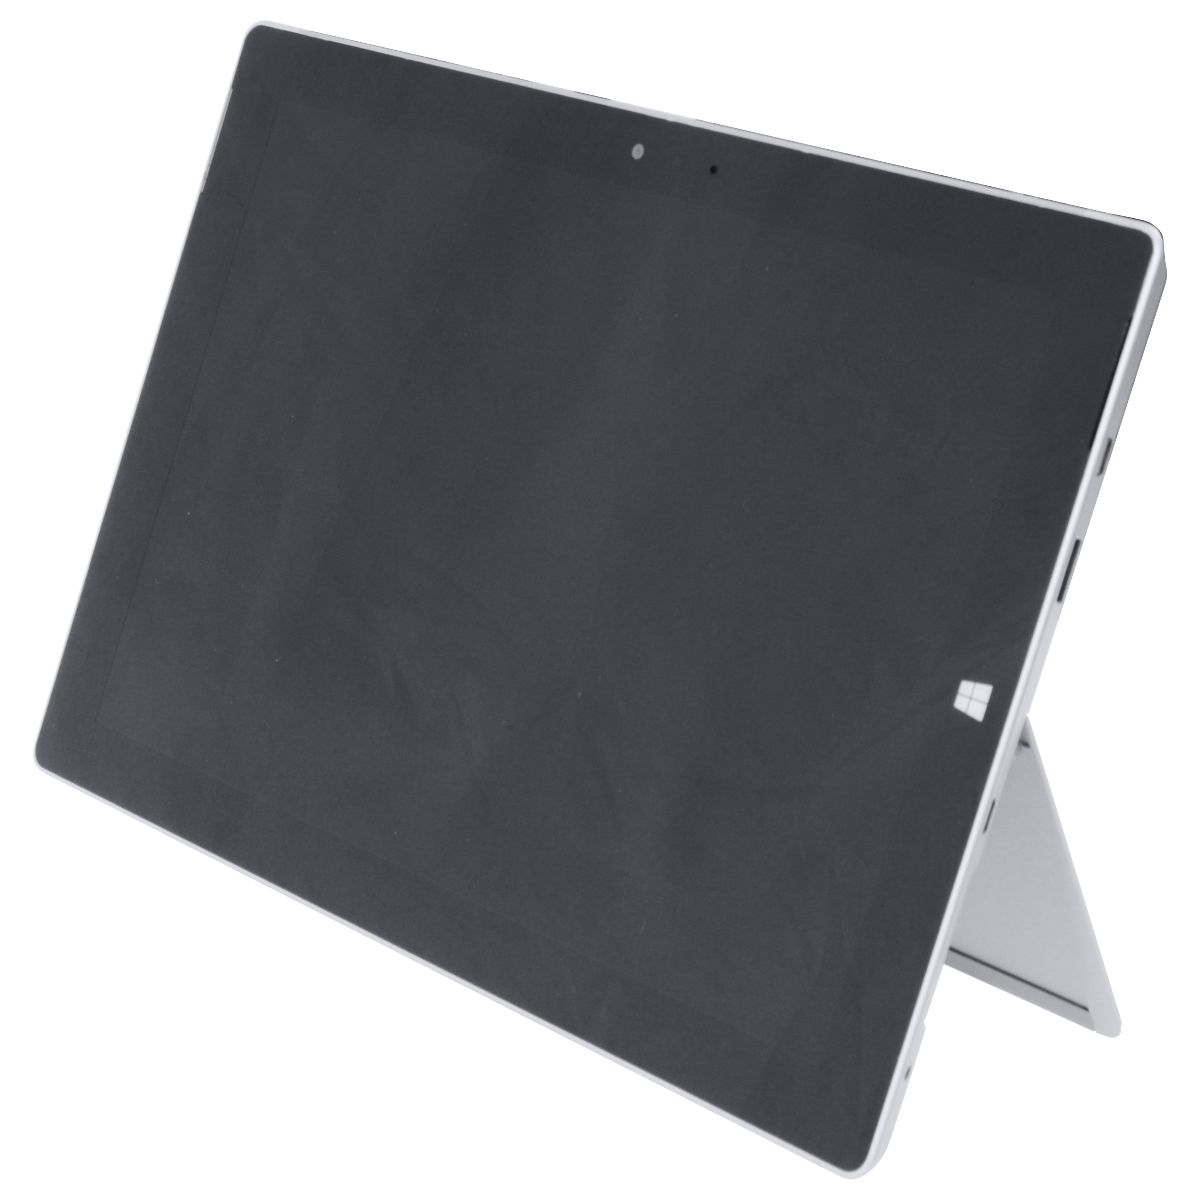 Microsoft Surface 3 (10.8-inch) Tablet 1657 LTE (Verizon) - 128GB / Silver